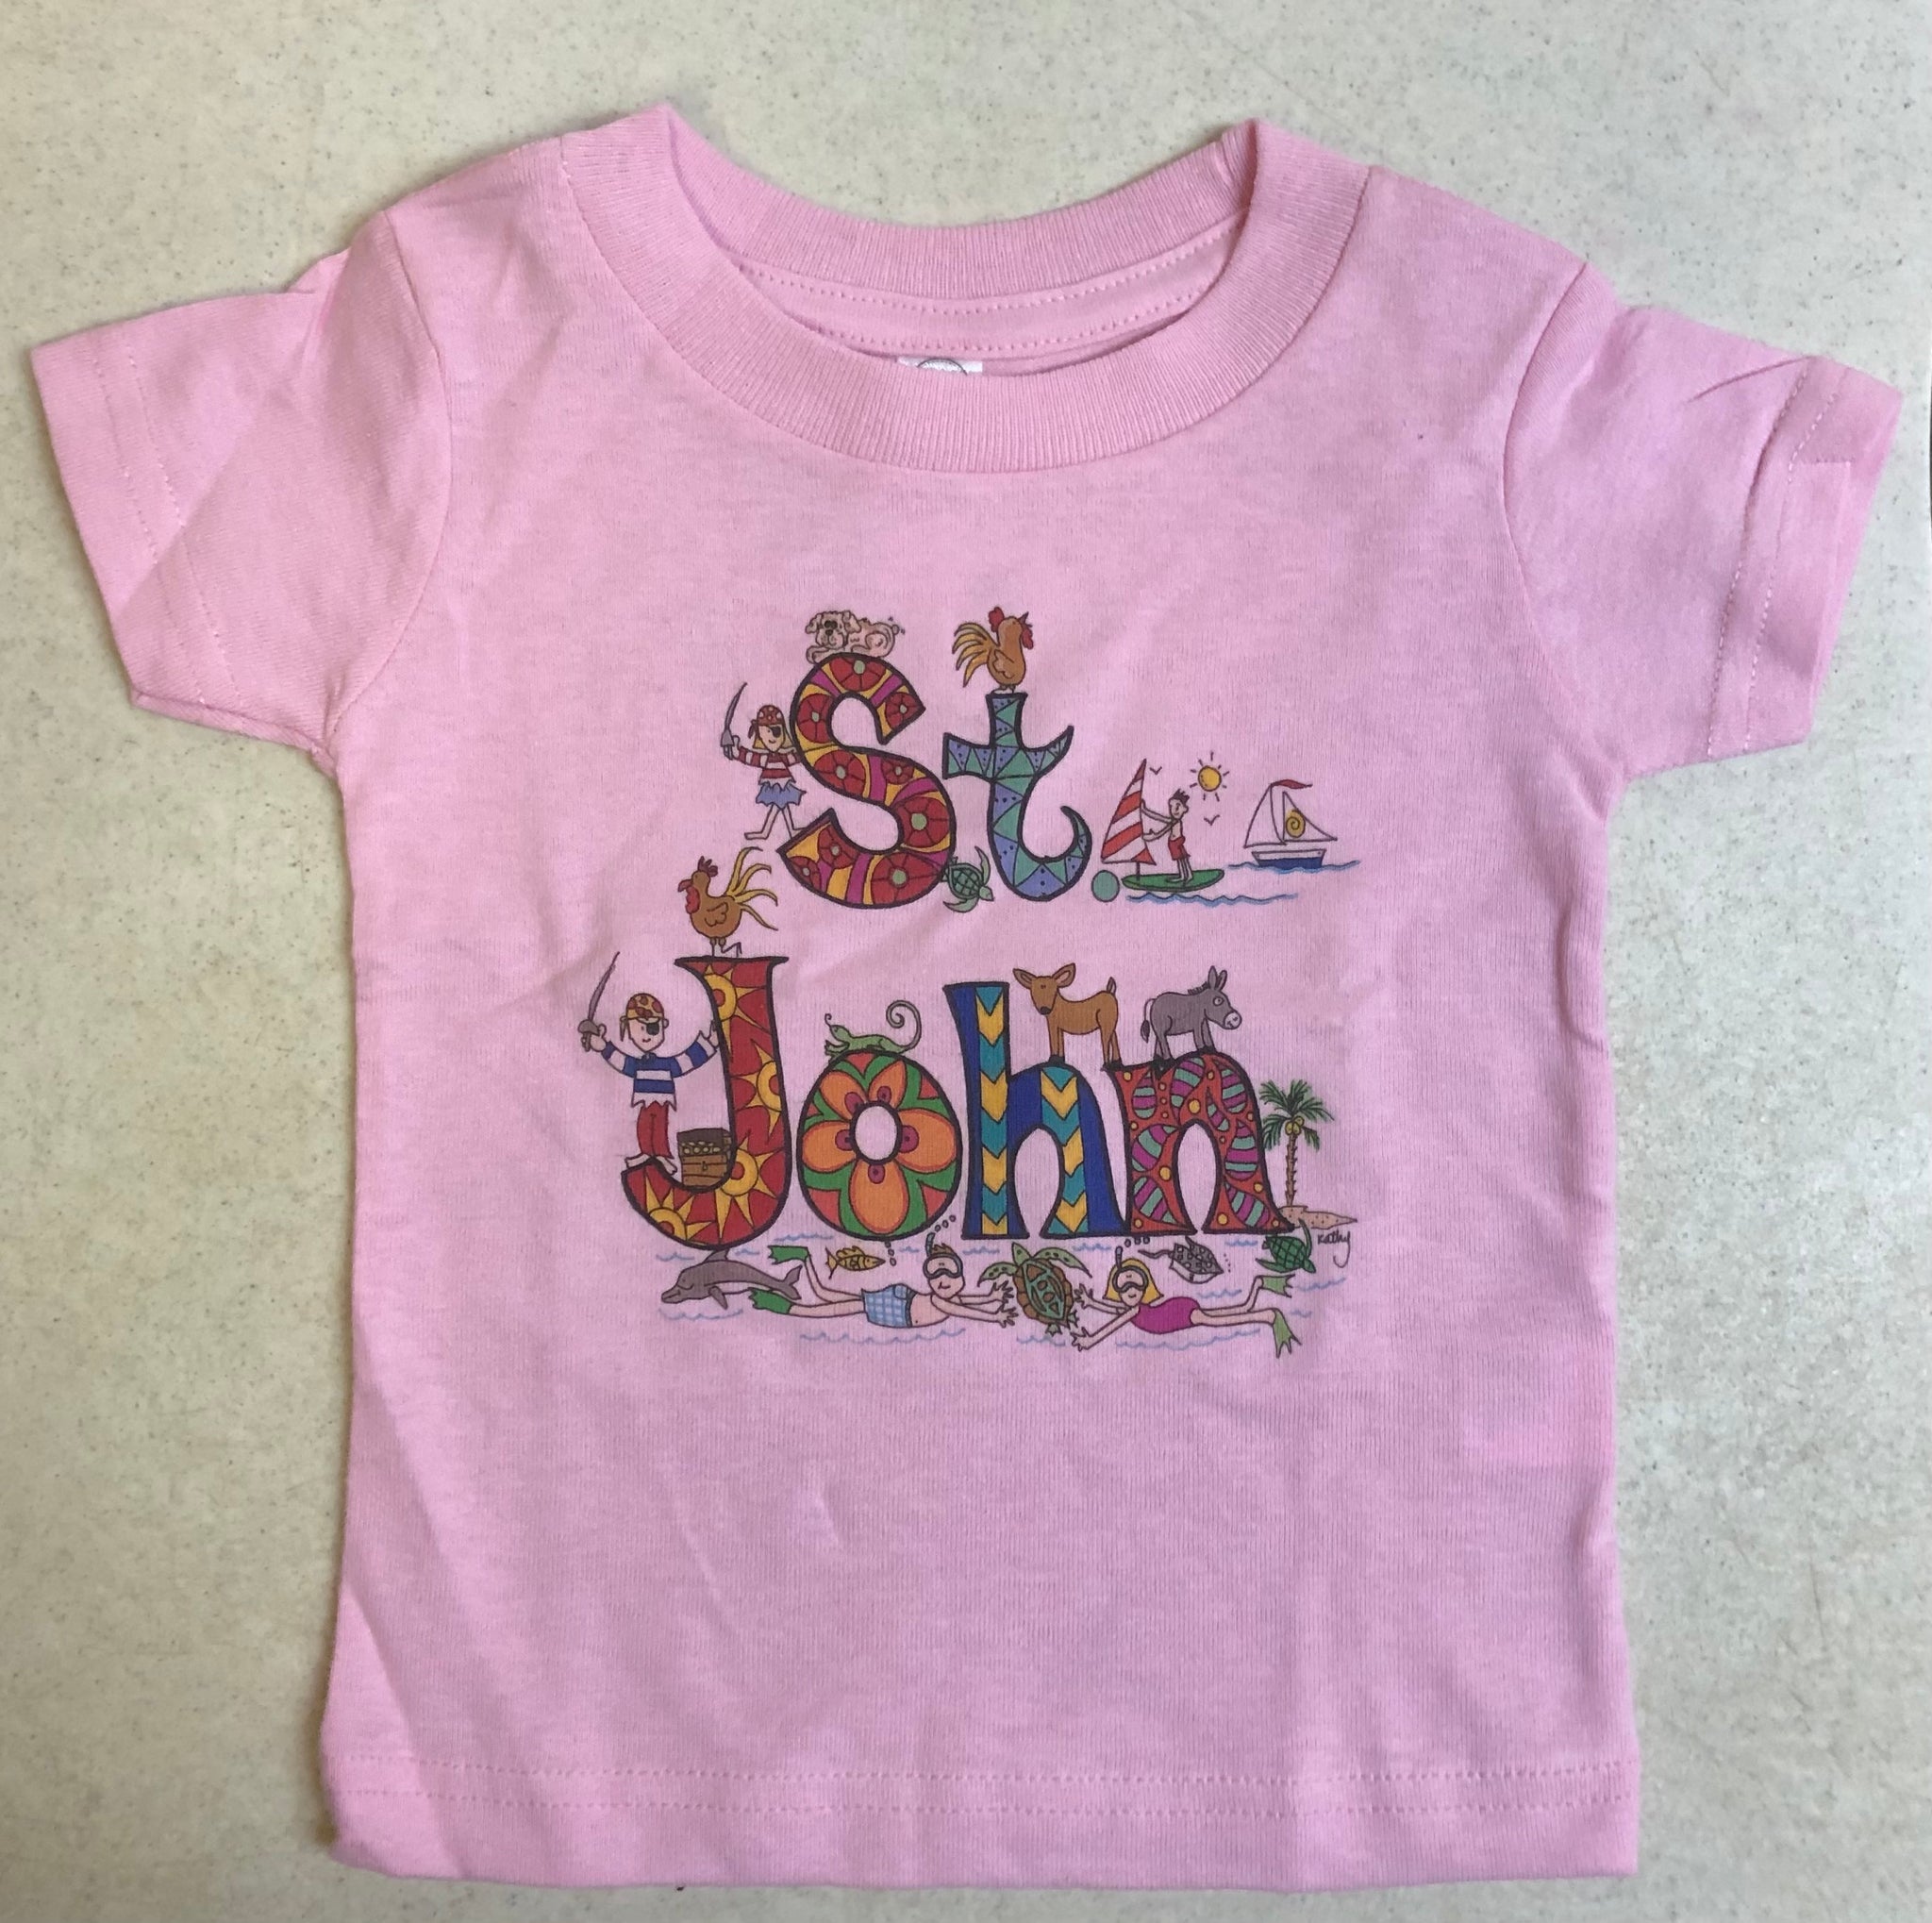 St. John Custom Design Youth Tee Shirt